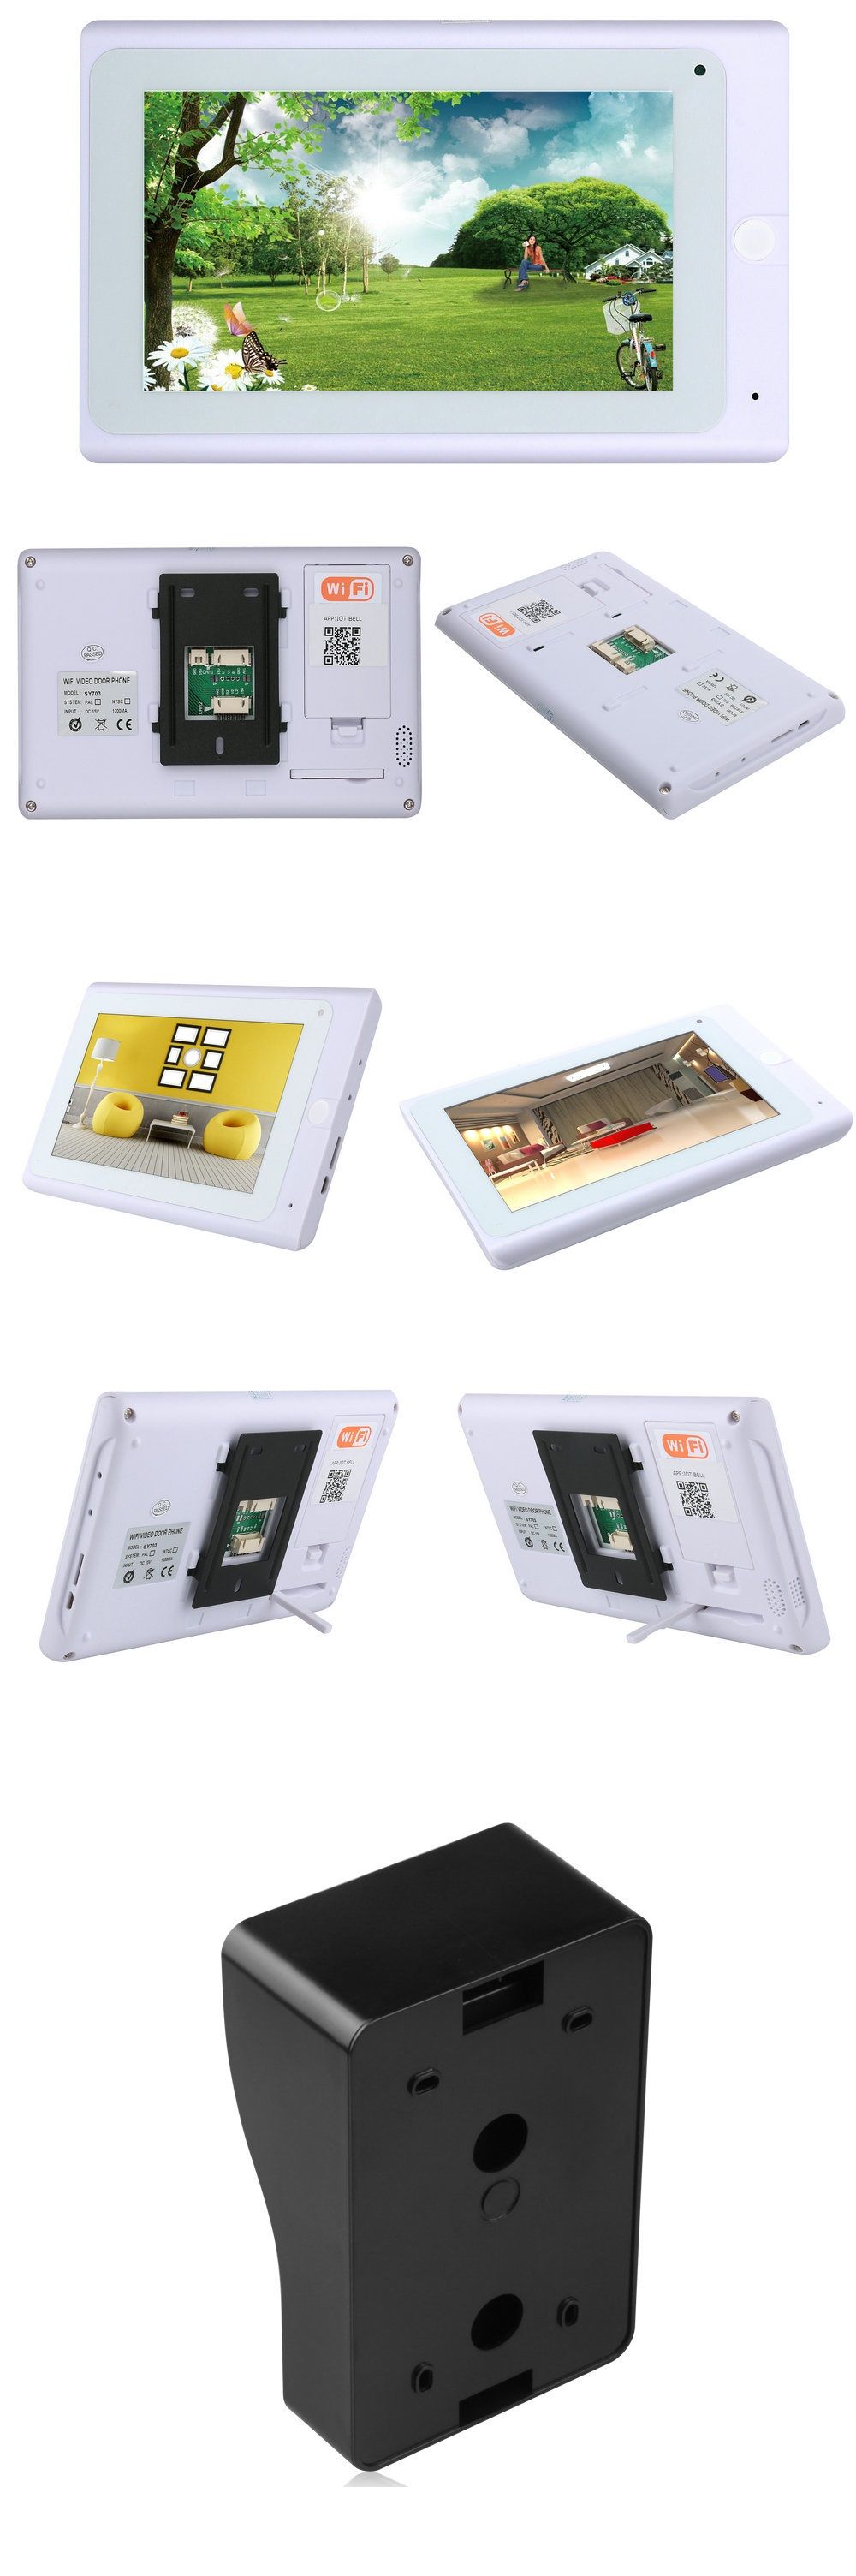 ENNIO-7inch-2-Monitors-Wireless-Wifi-RFID-Video-Doorbell-Intercom-Entry-System-with-Wired-IR-CUT-108-1624629